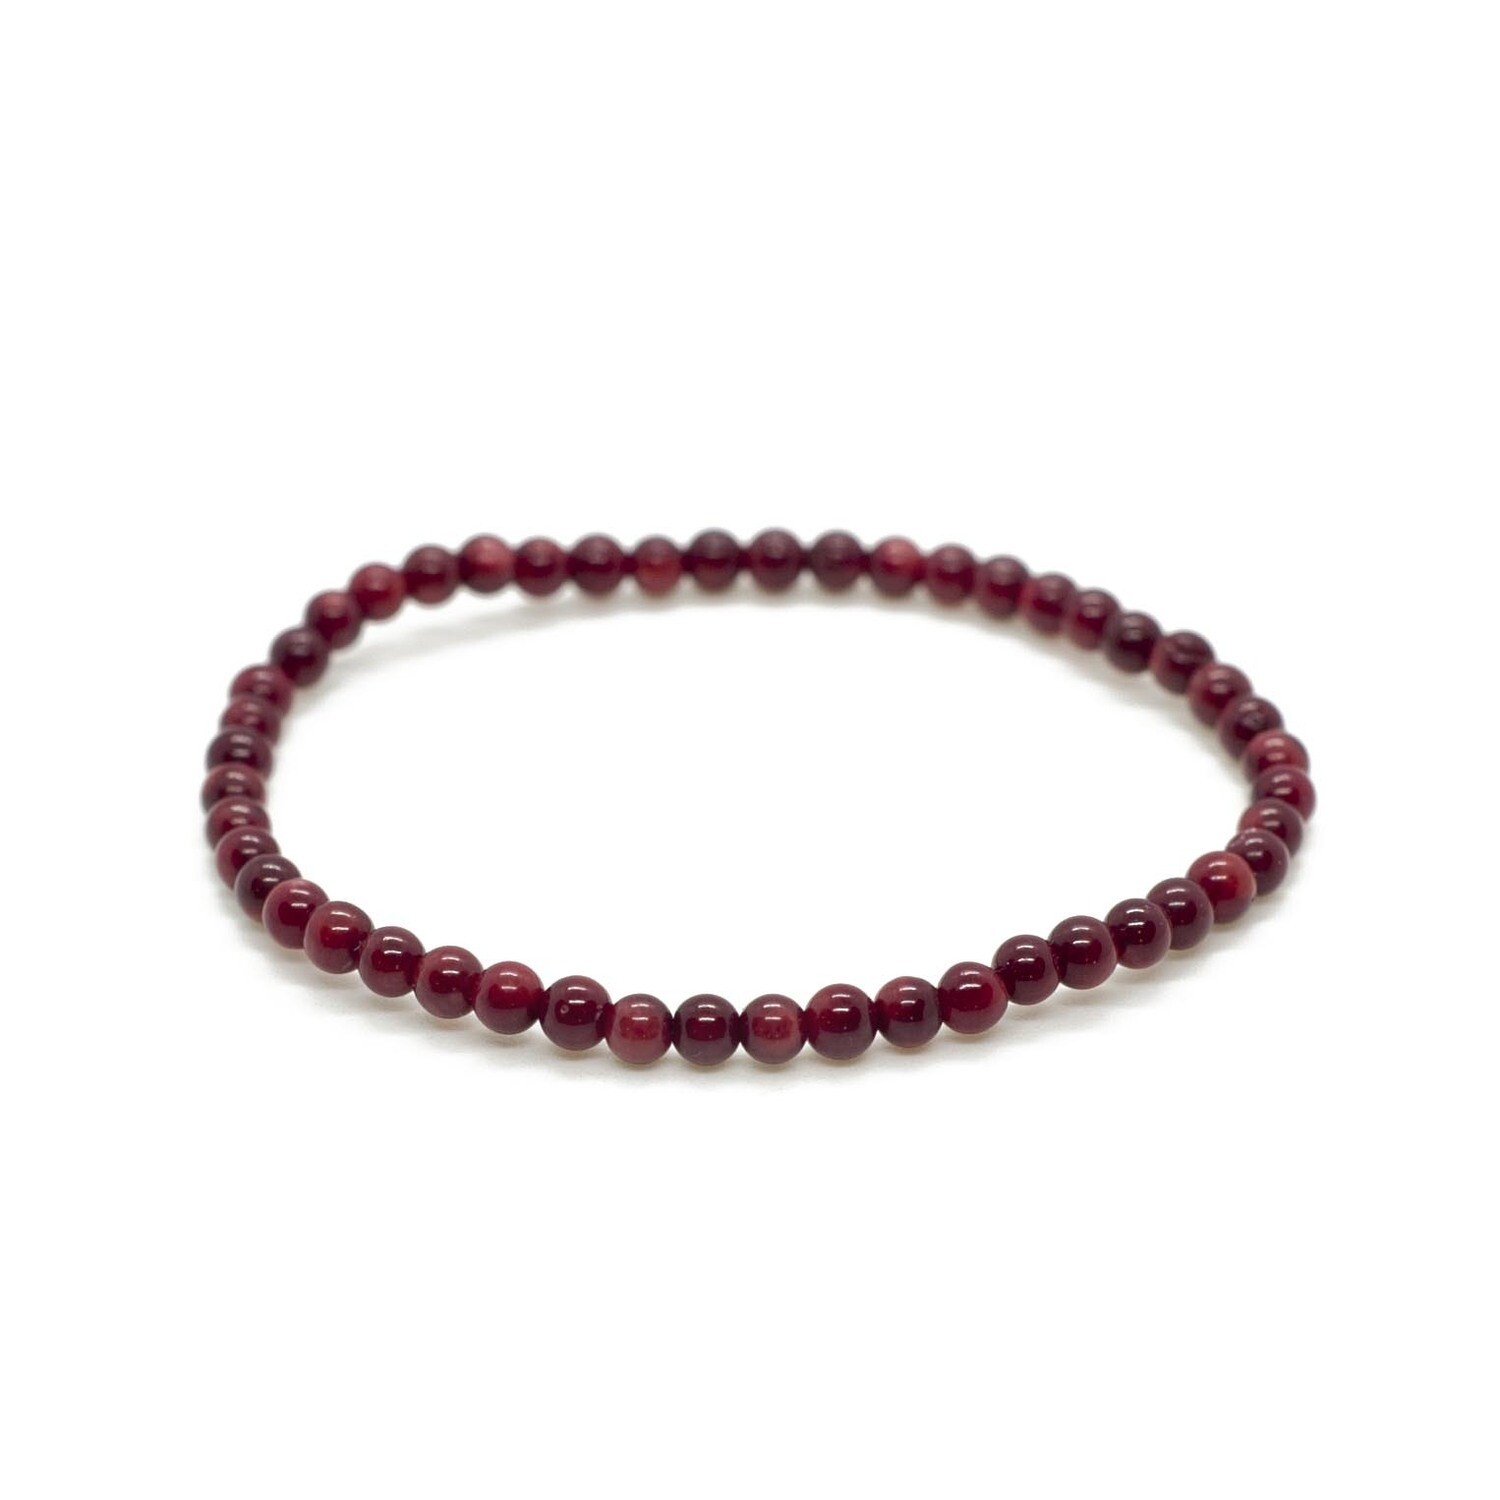 Coral gemstone bracelet